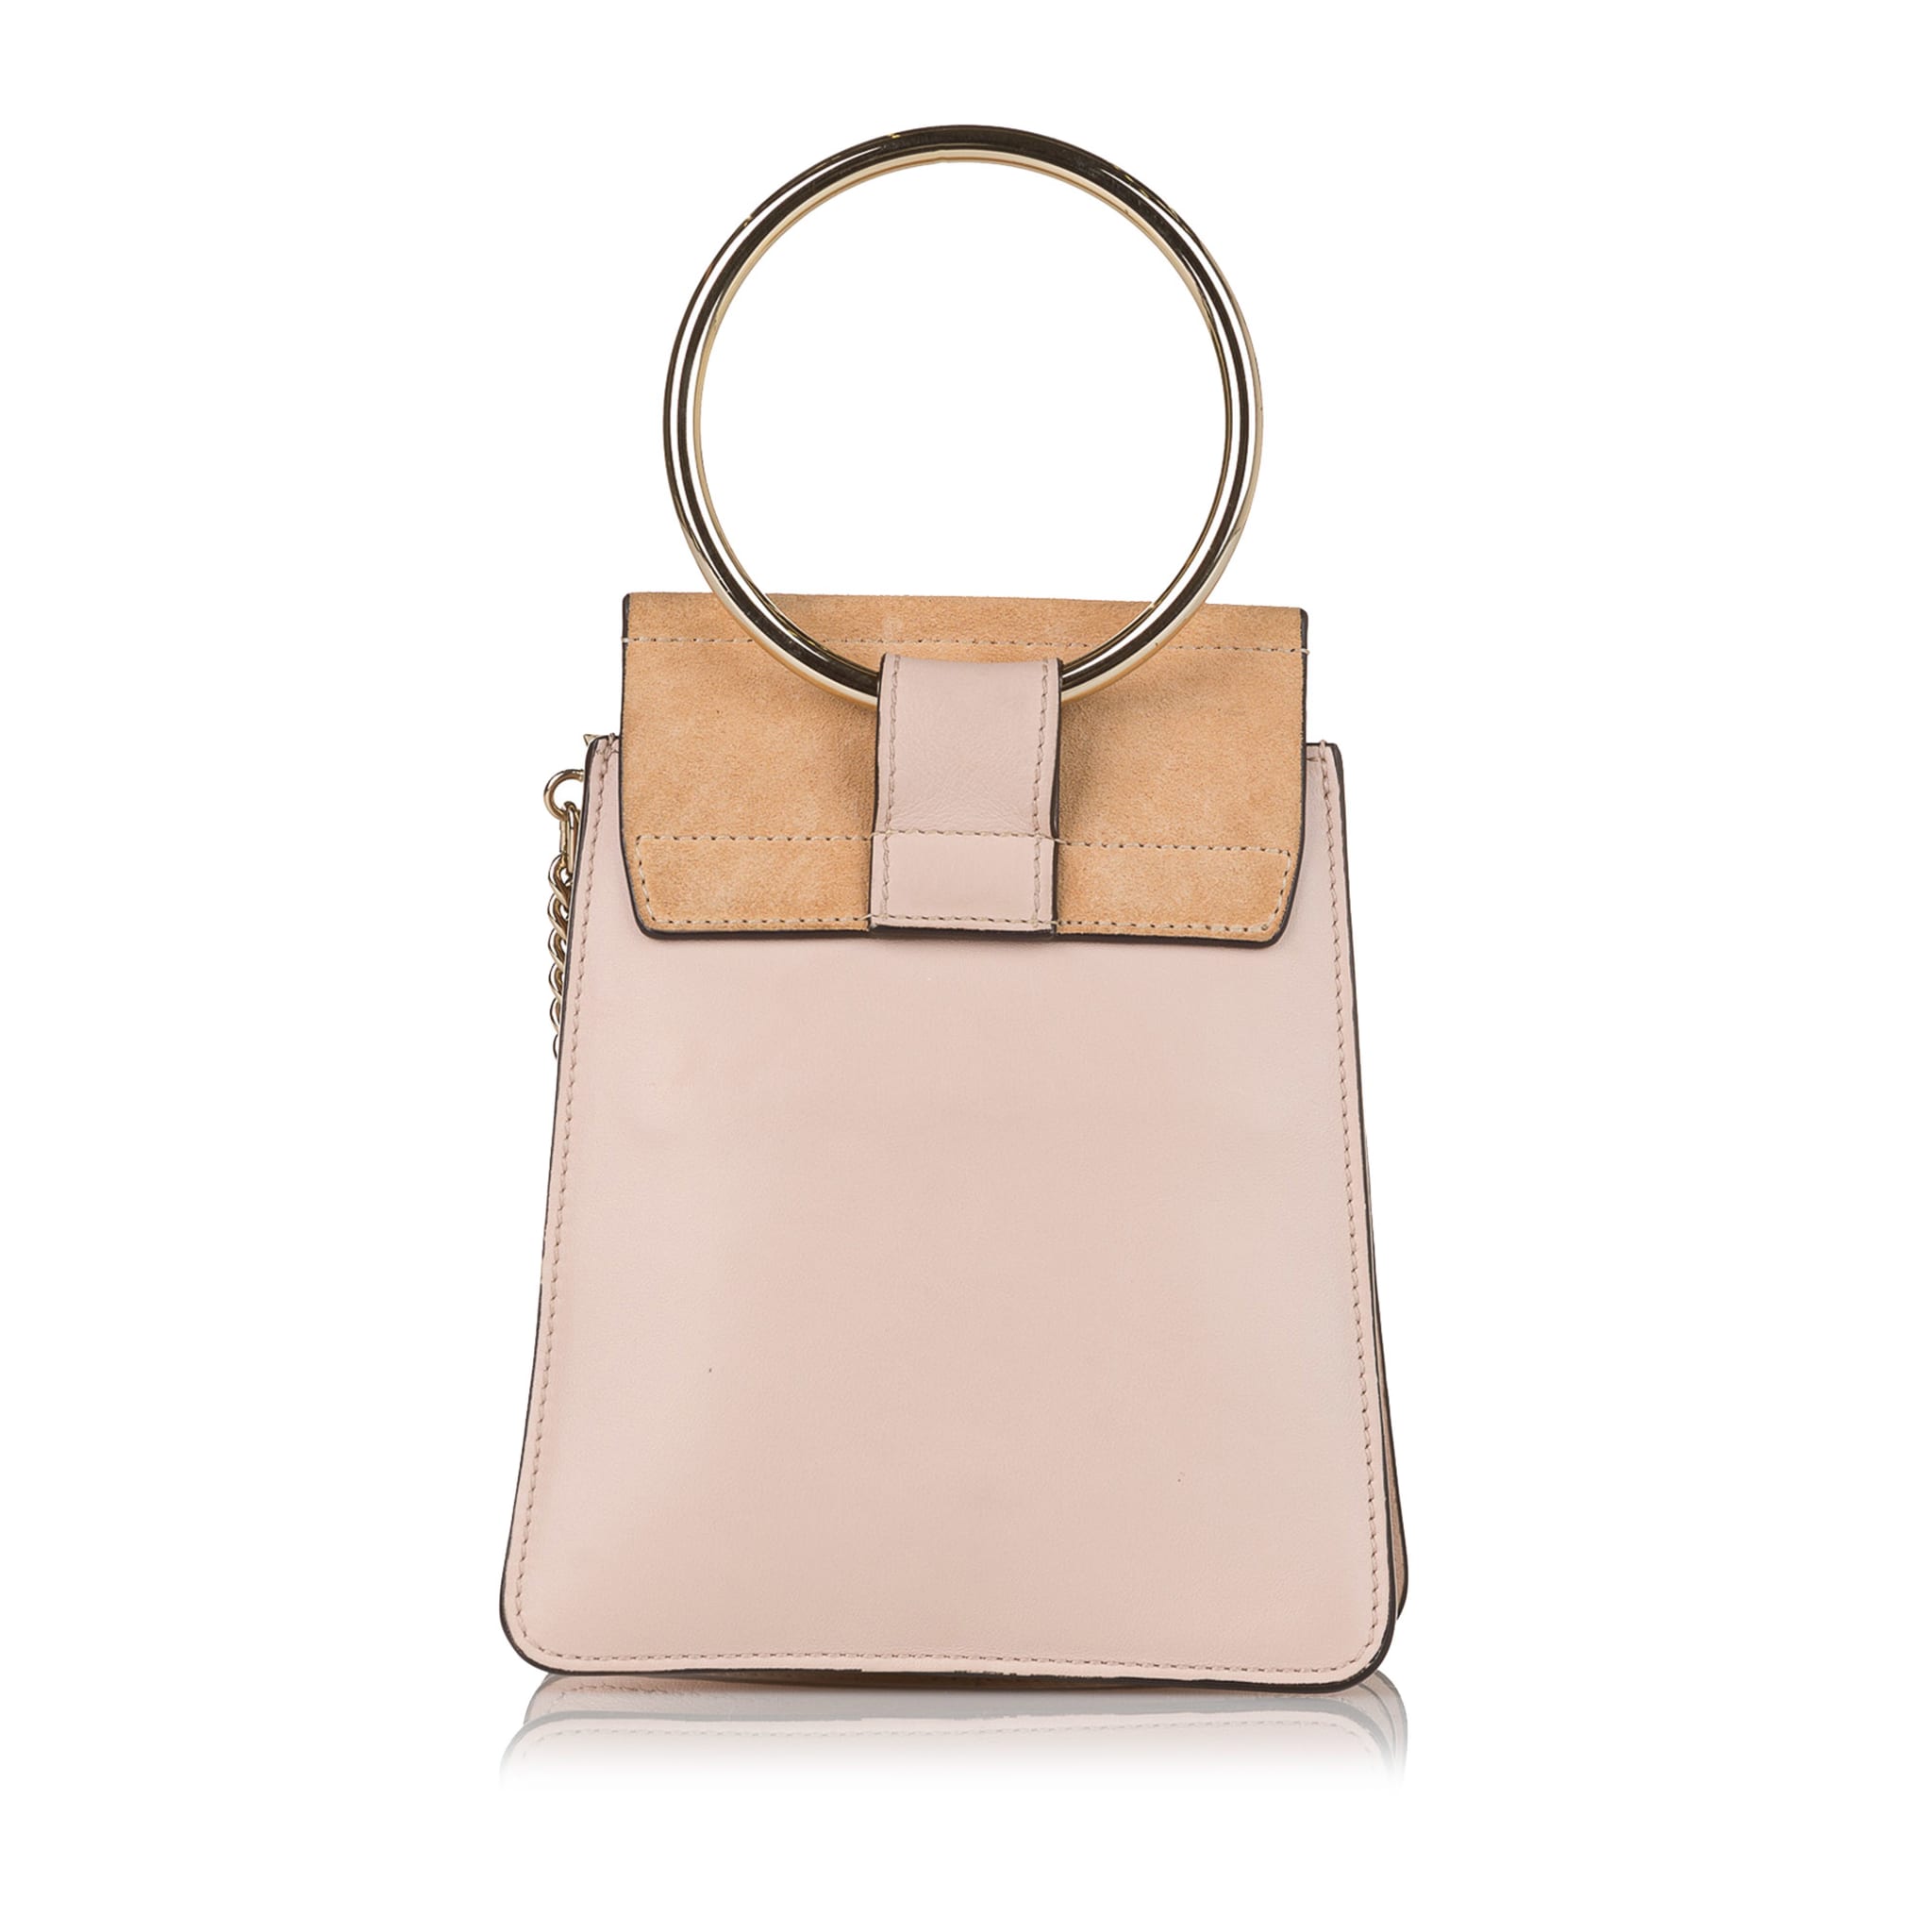 Chloe Faye Bracelet Leather Crossbody Bag, ONESIZE, light pink